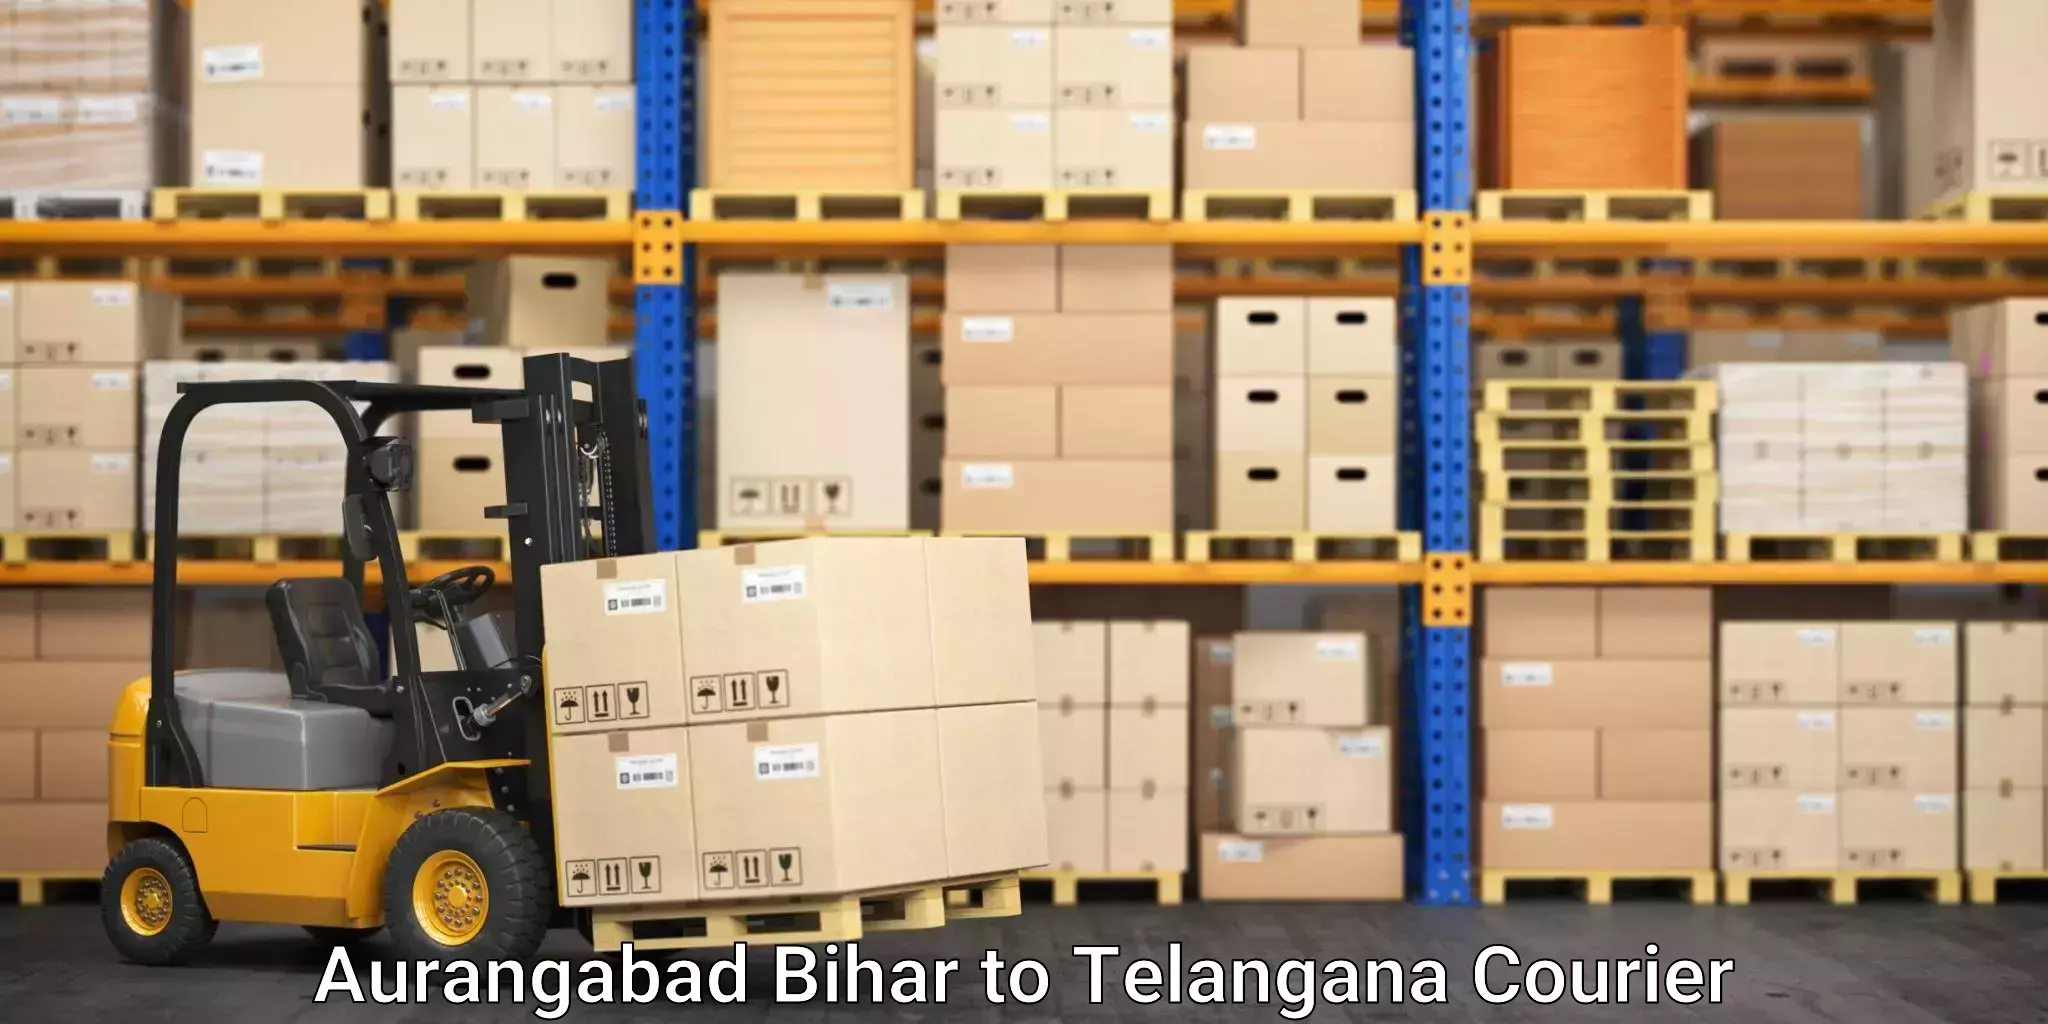 Reliable movers Aurangabad Bihar to Allapalli